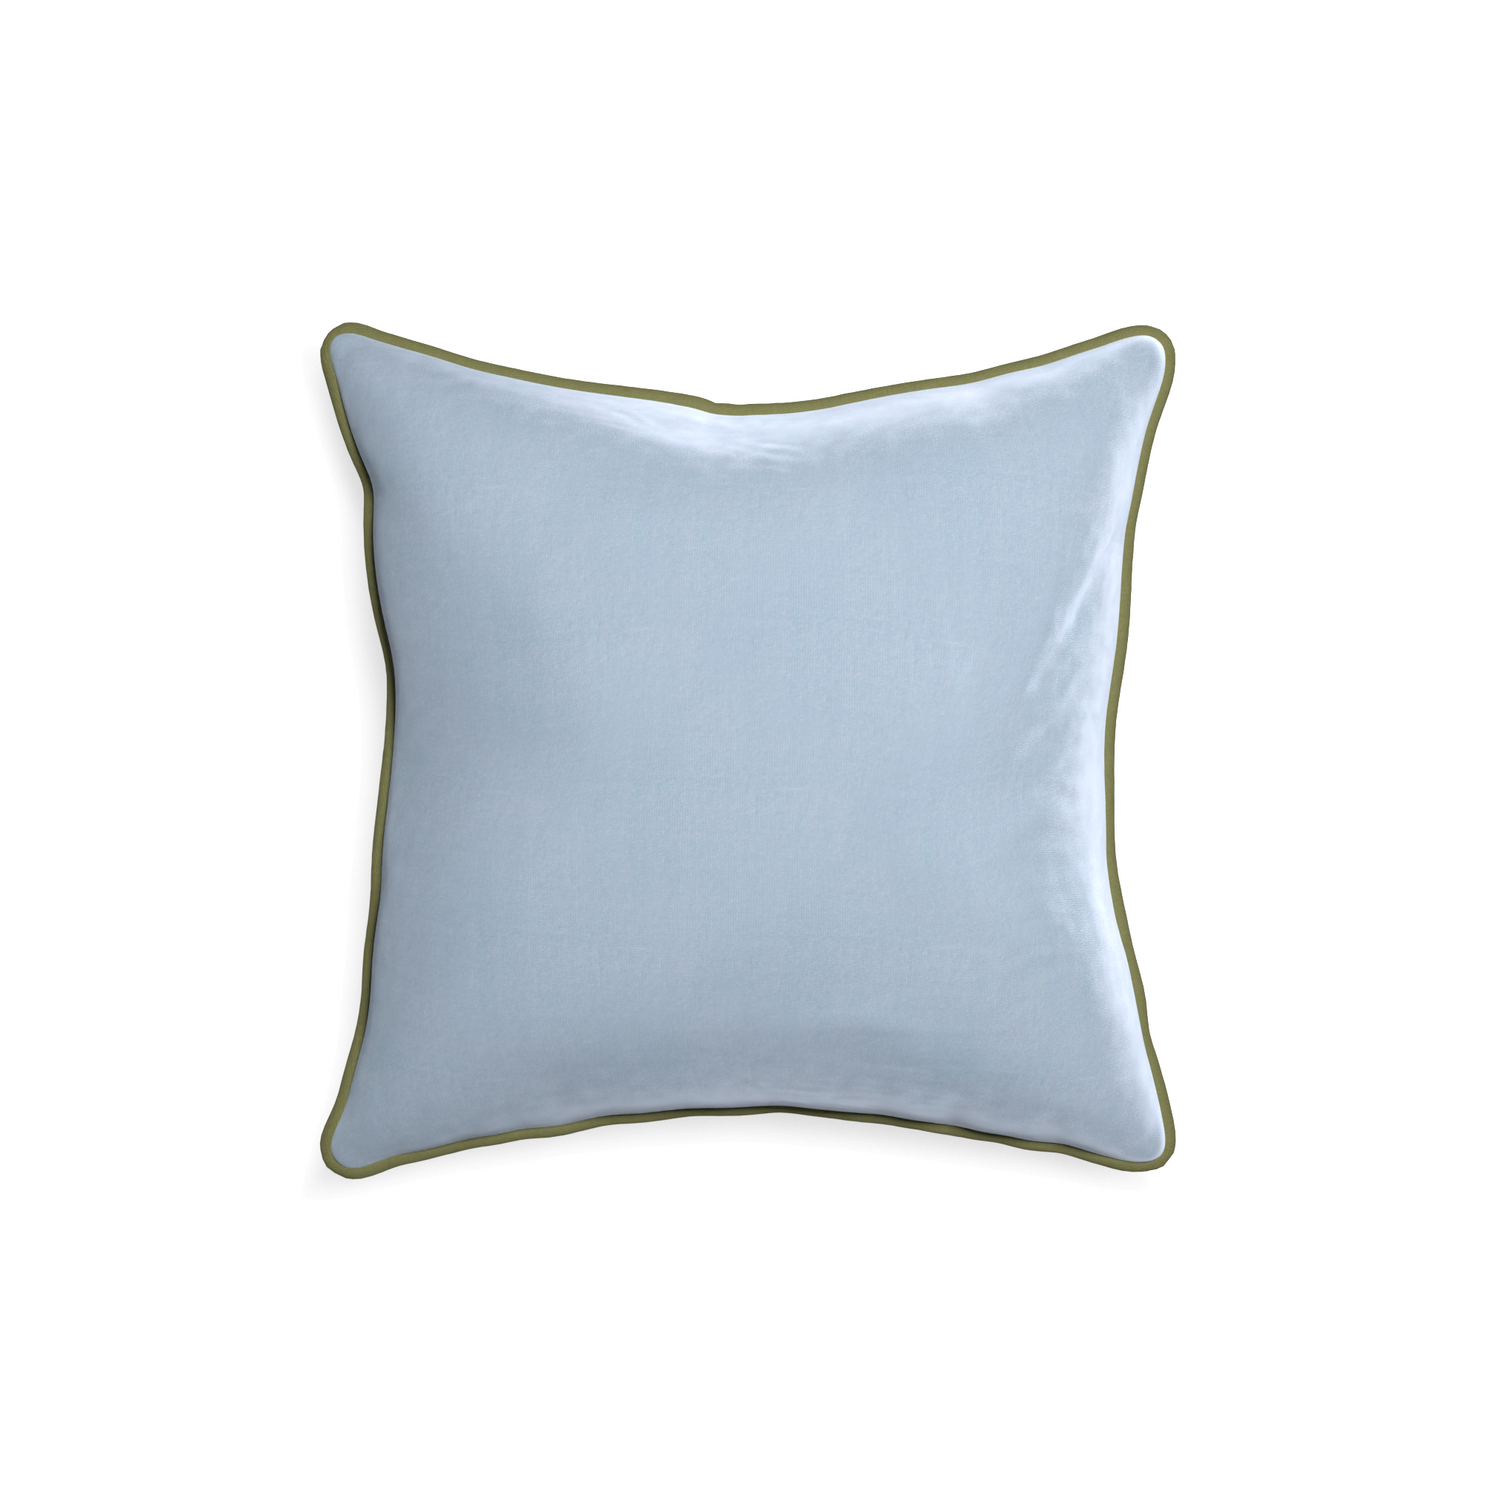 18-square sky velvet custom pillow with moss piping on white background